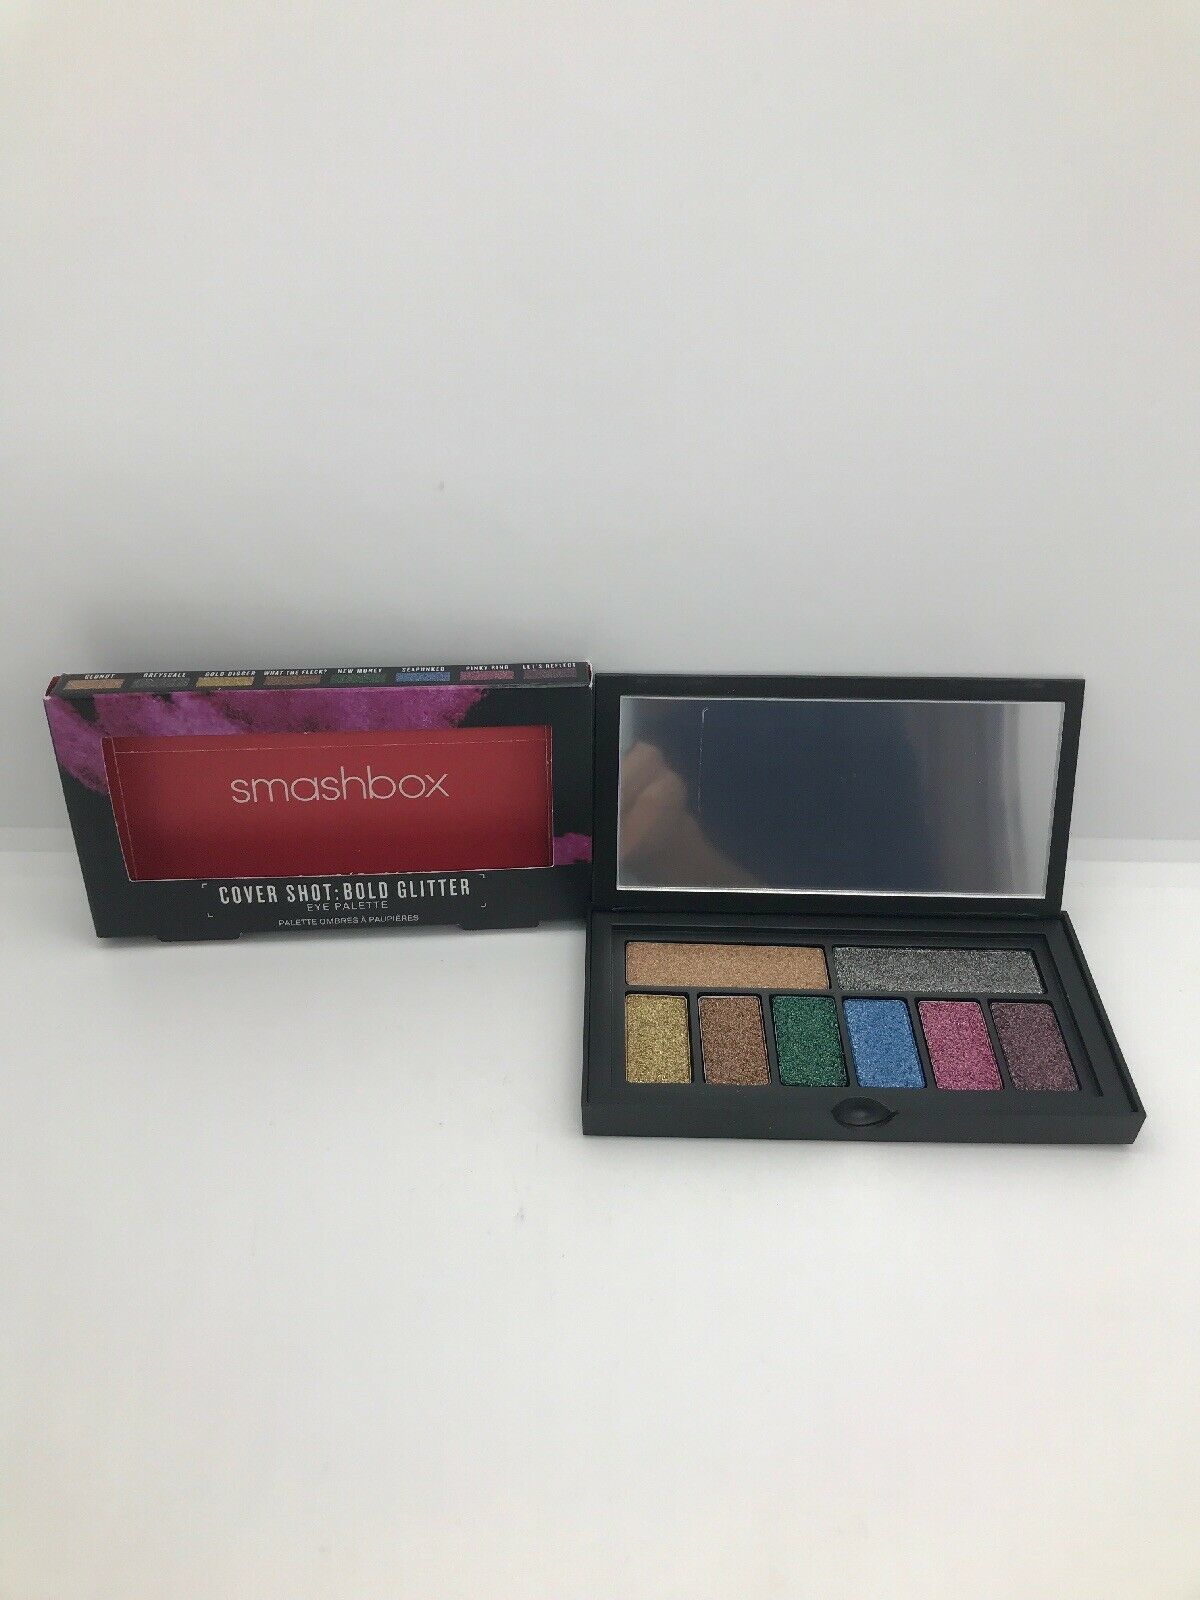 Smashbox Cover Shot Eye Eyeshadow Palette in Bold Glitter - Full Size New In Box - $19.79